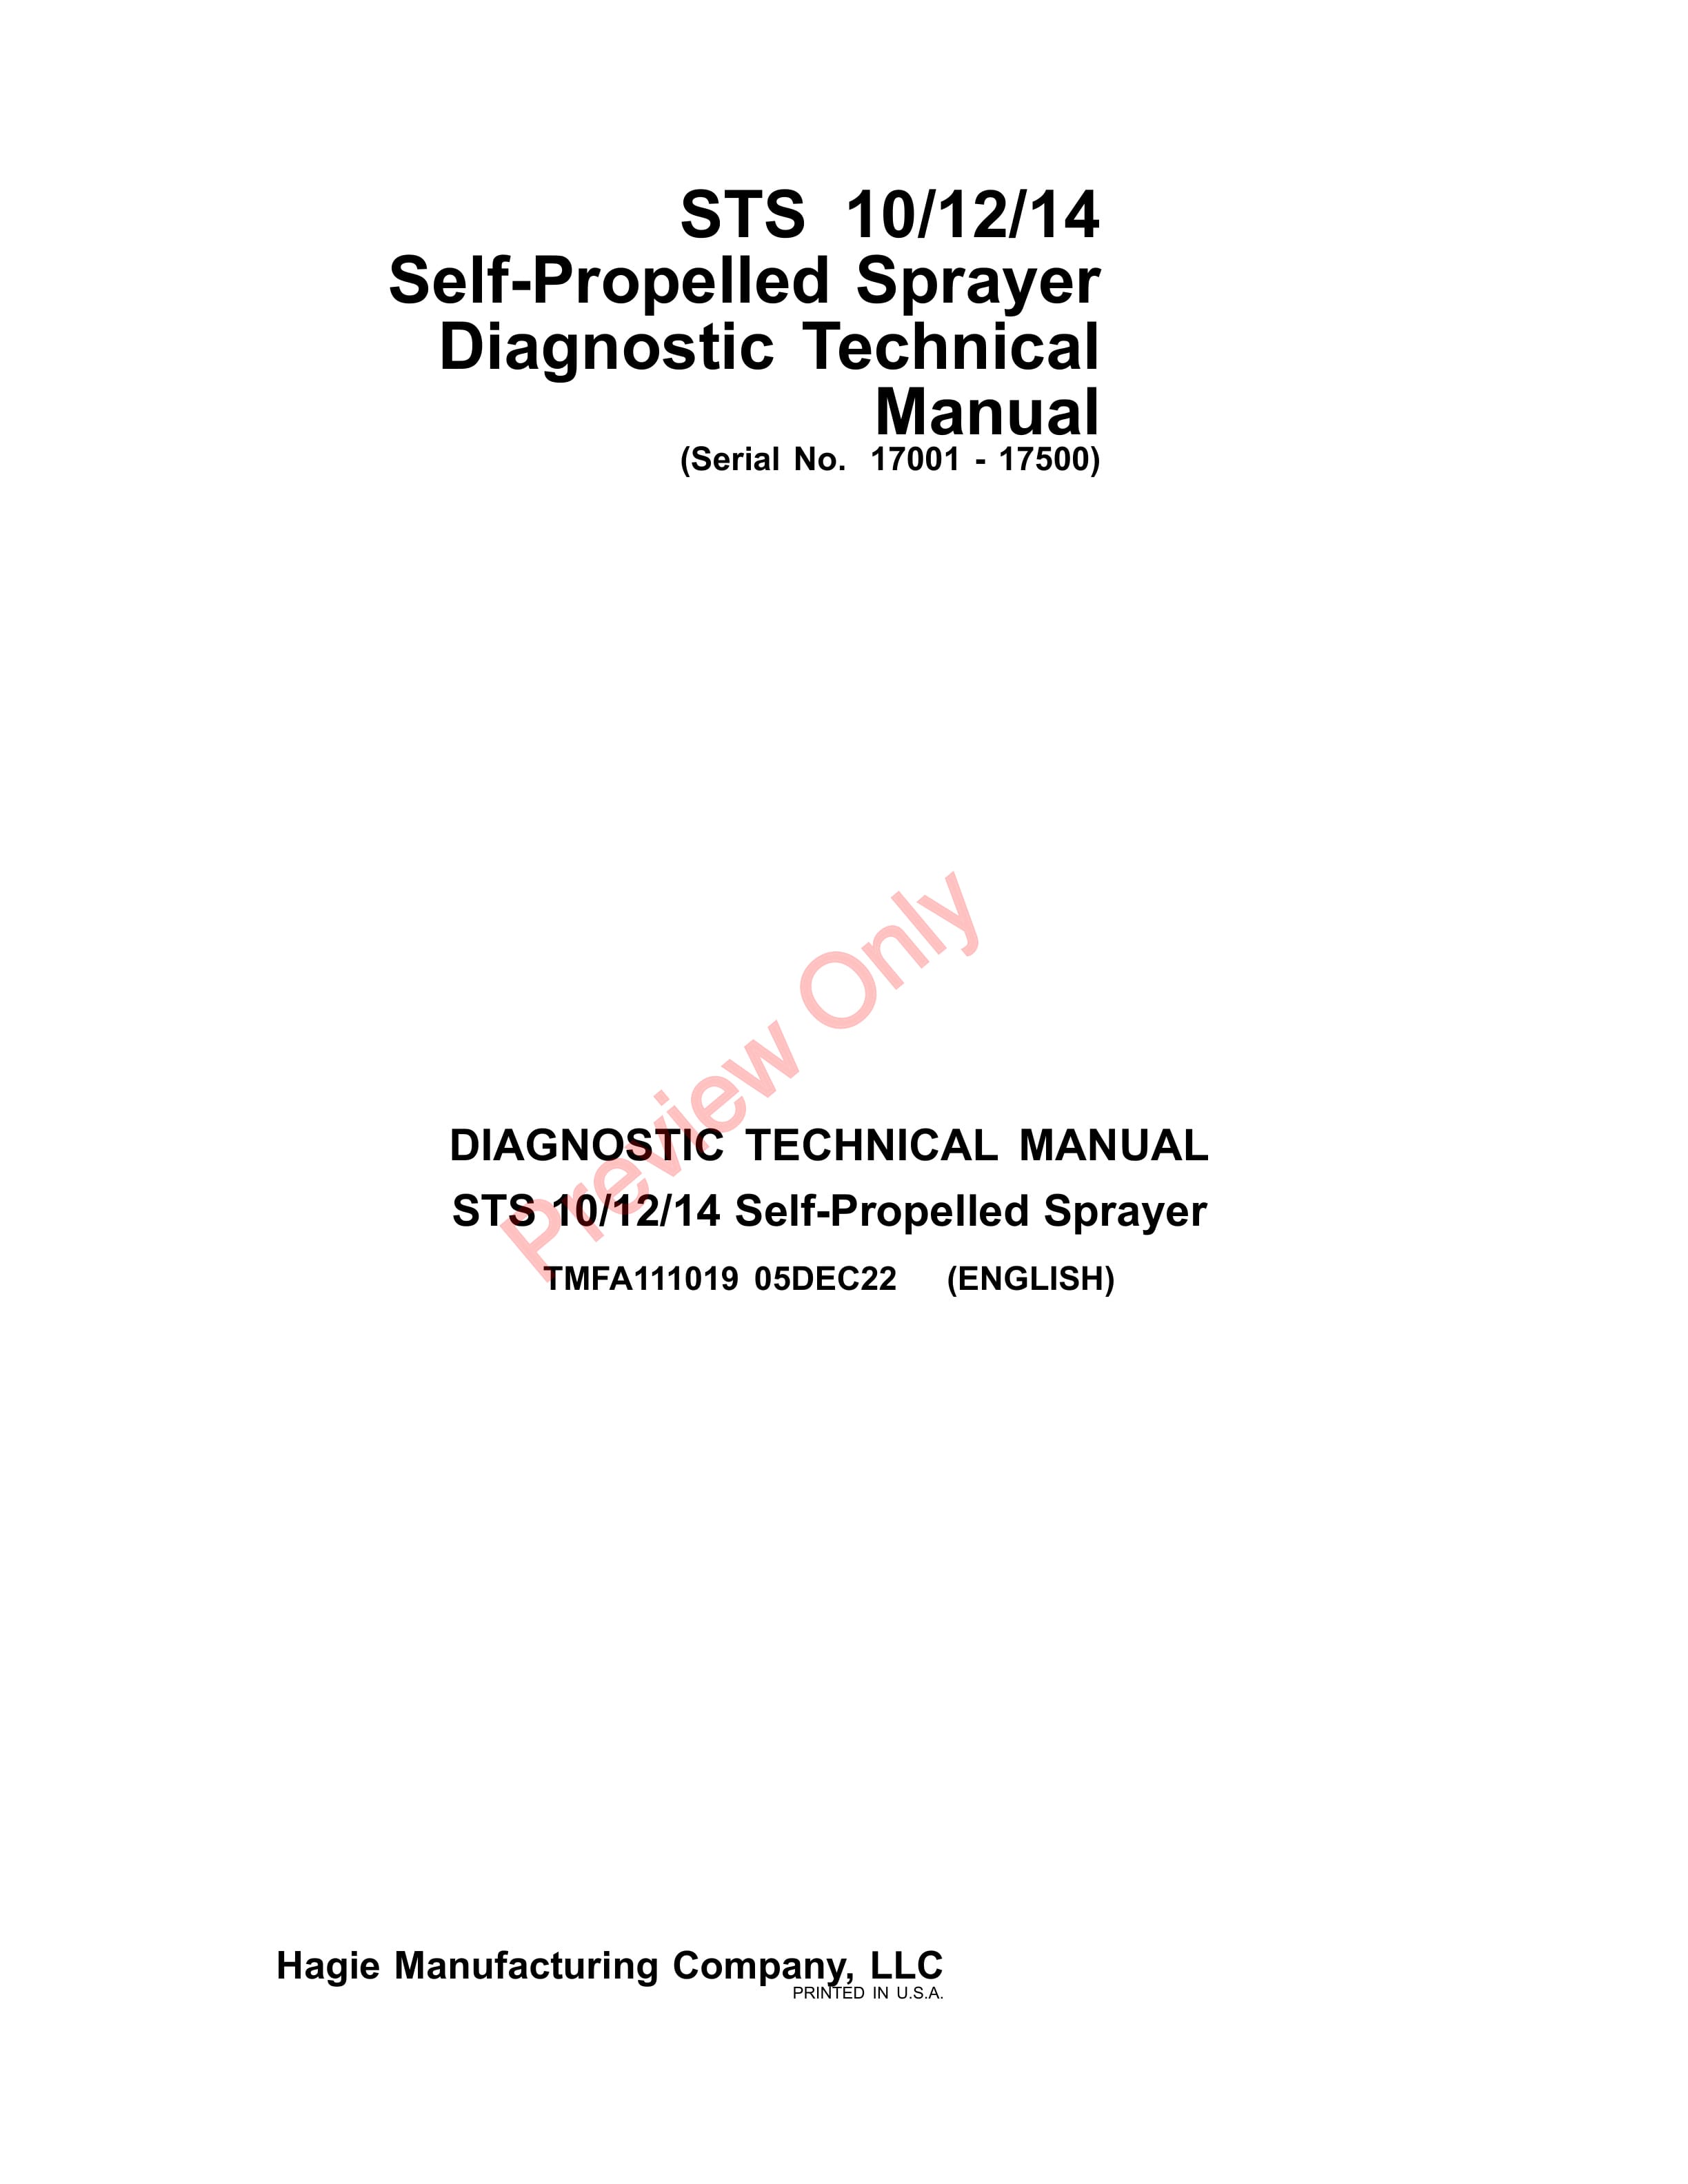 John Deere STS 101214 Self-Propelled Sprayer (017001-017500) Diagnostic Technical Manual TMFA111019 05DEC22-1